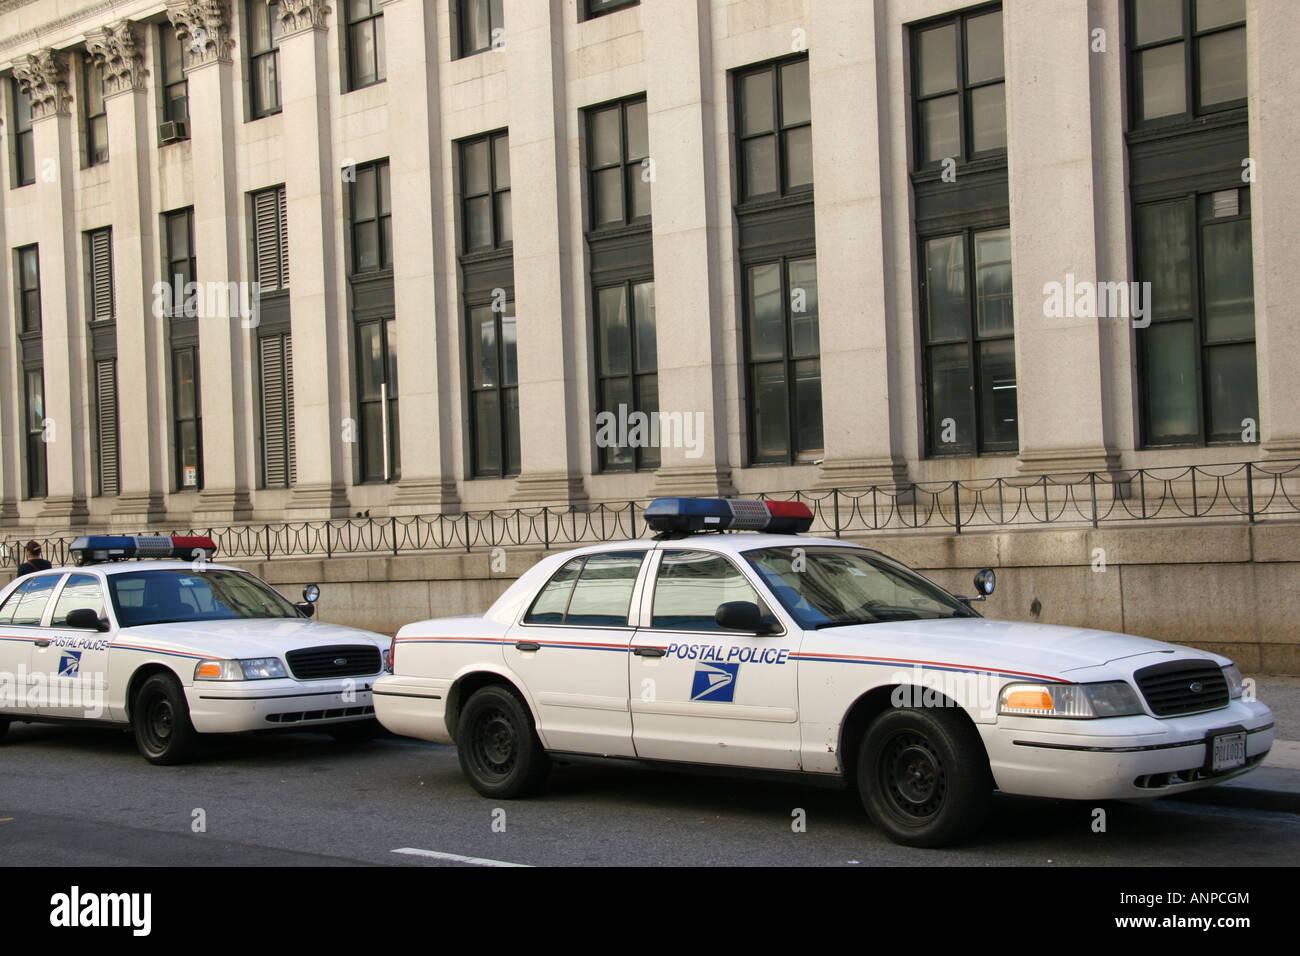 US Postal Police außerhalb von New York City Post Office Stockfoto